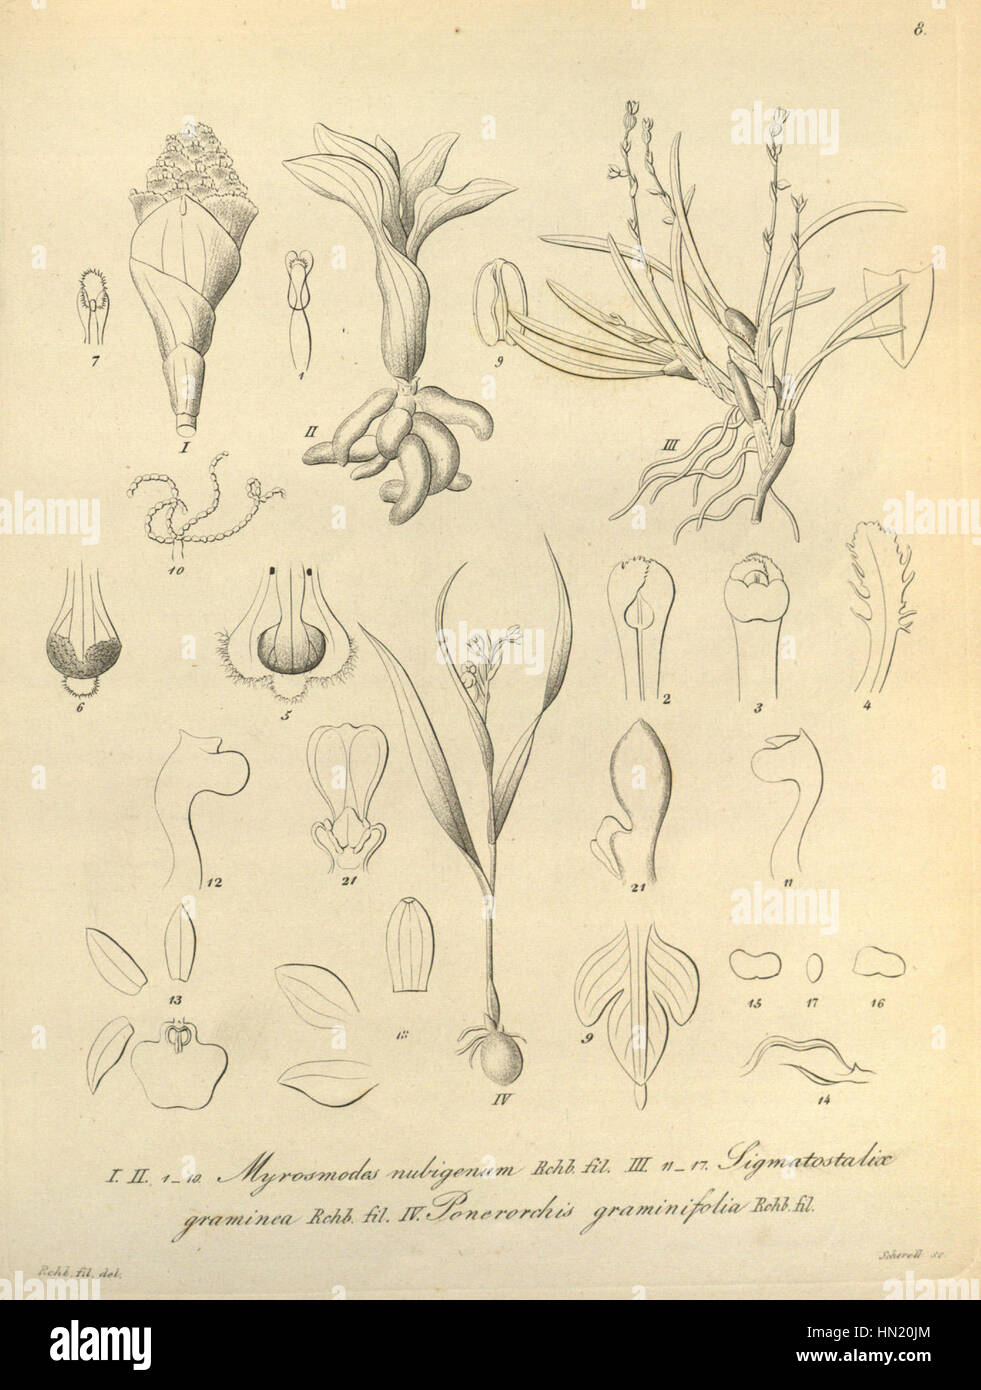 Myrosmodes nubigerum-Sigmatostalix graminea-Ponerorchis graminifolia - Xenia 1 fig 8 (1858) Stock Photo